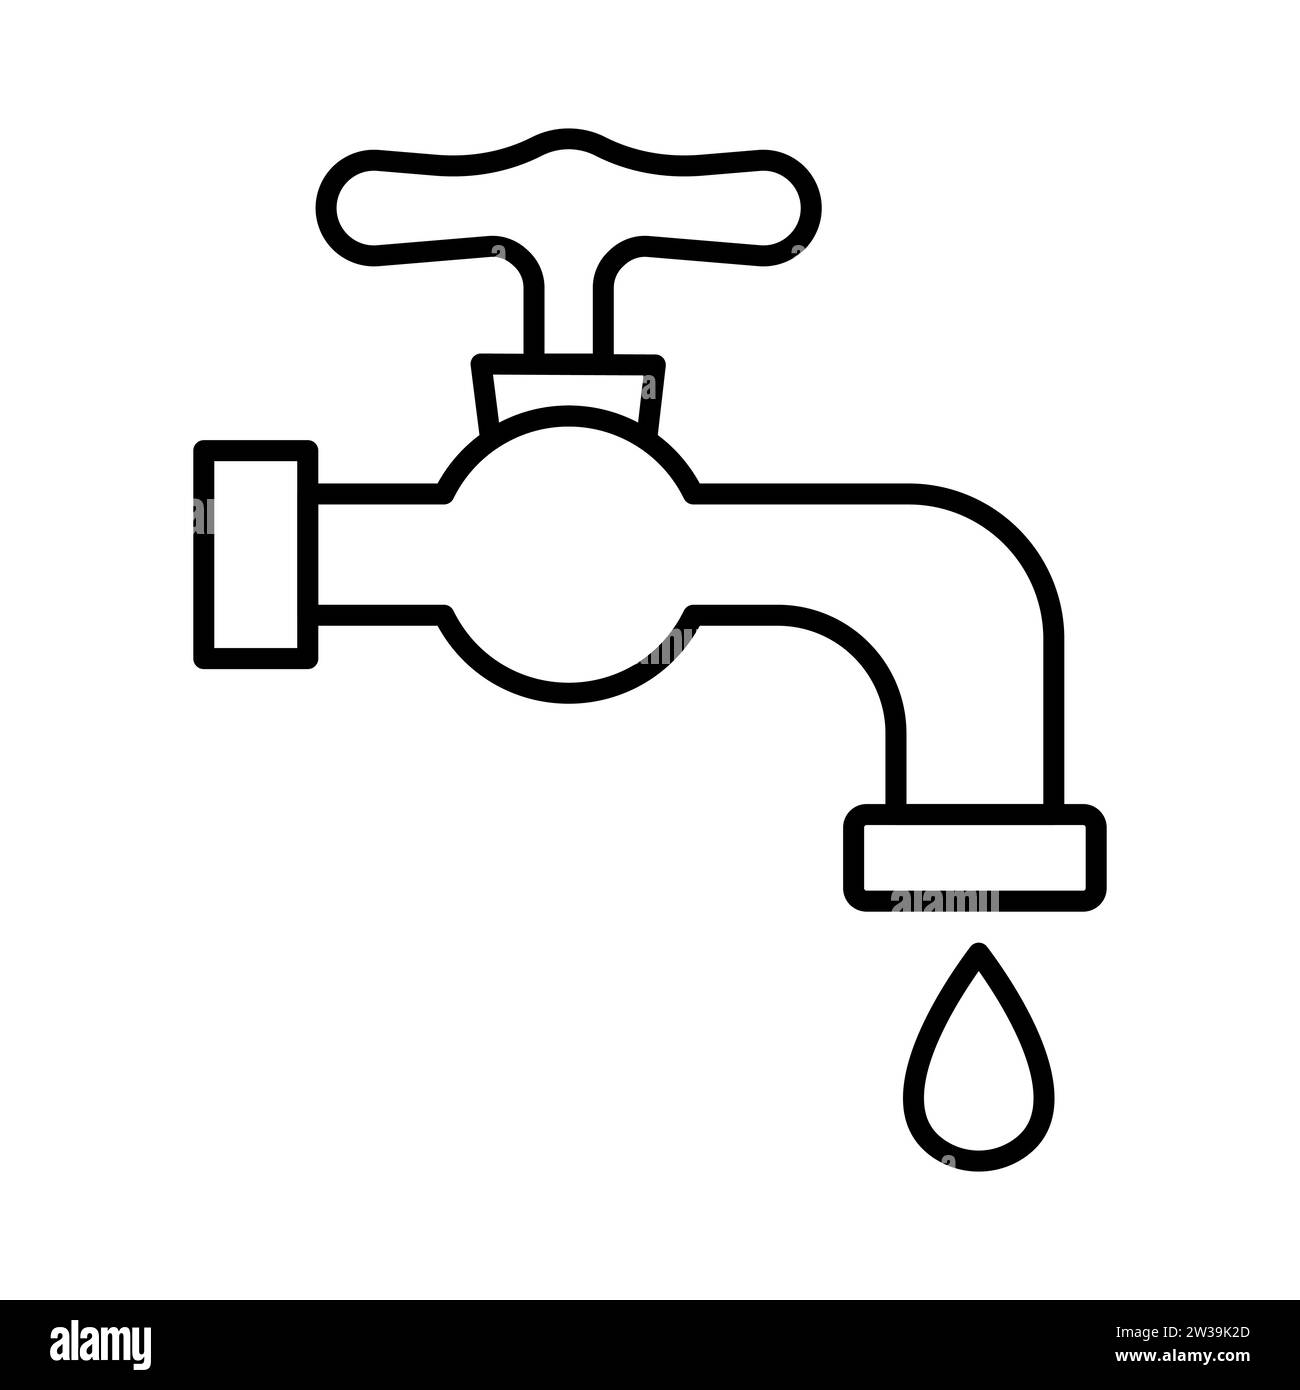 Faucet illustration. Water, drop, bath, sink, plumber plumbing valve shower pipe leak Vector icons Stock Vector